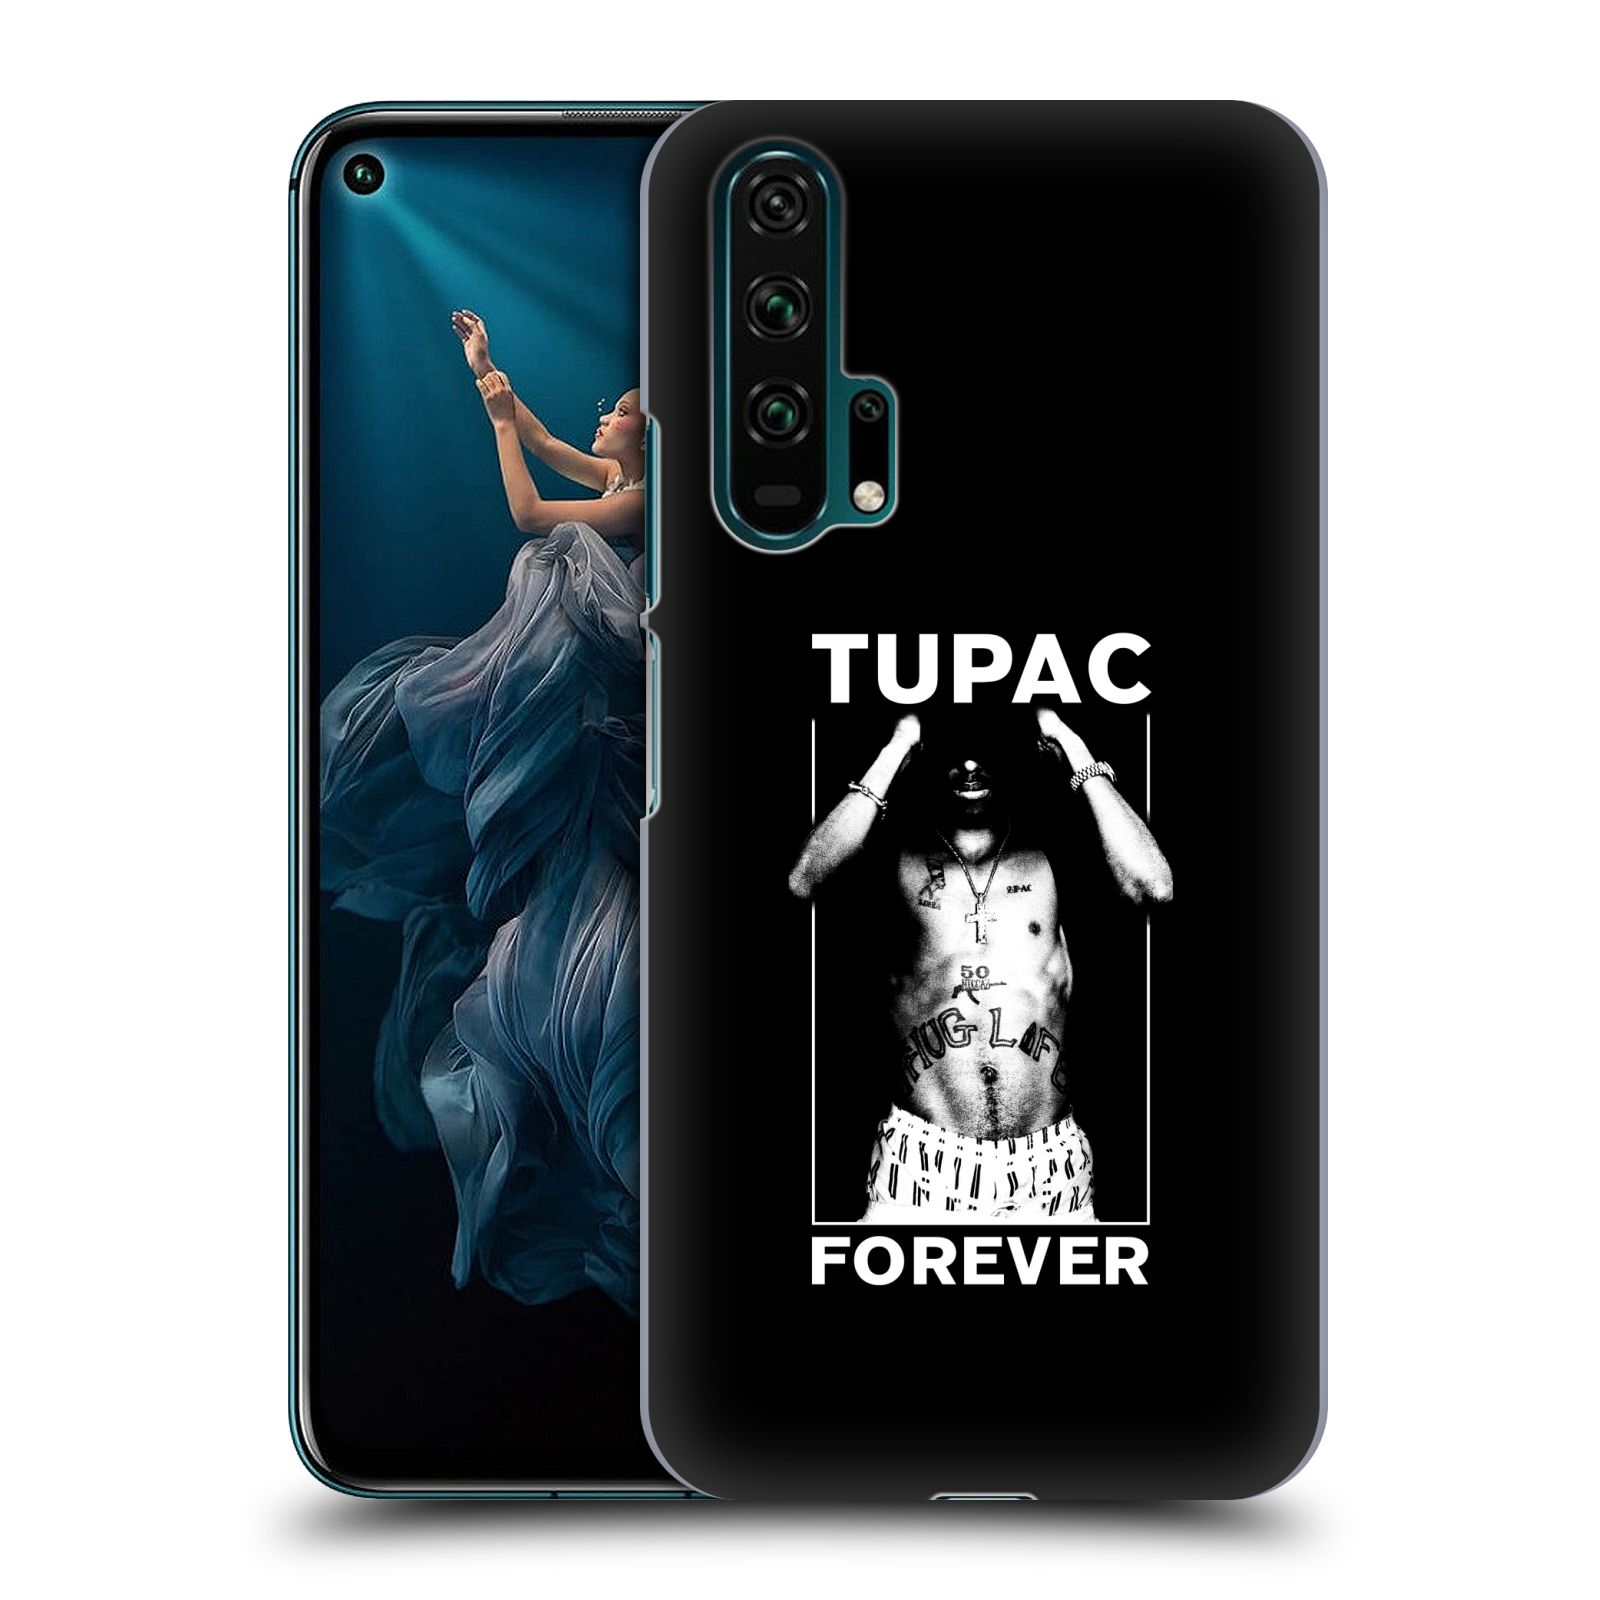 Pouzdro na mobil Honor 20 PRO - HEAD CASE - Zpěvák rapper Tupac Shakur 2Pac bílý popisek FOREVER